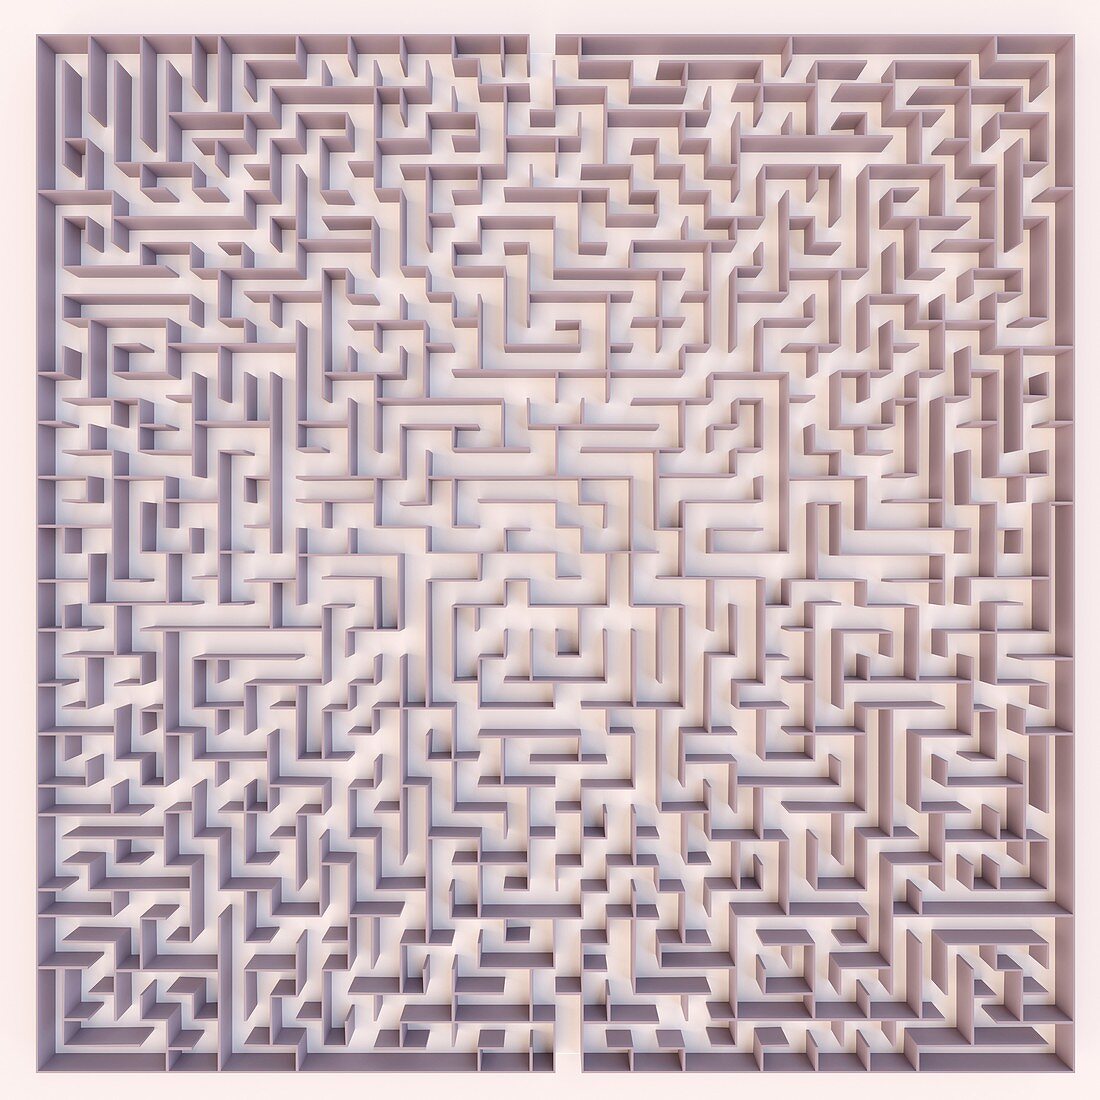 Maze, illustration